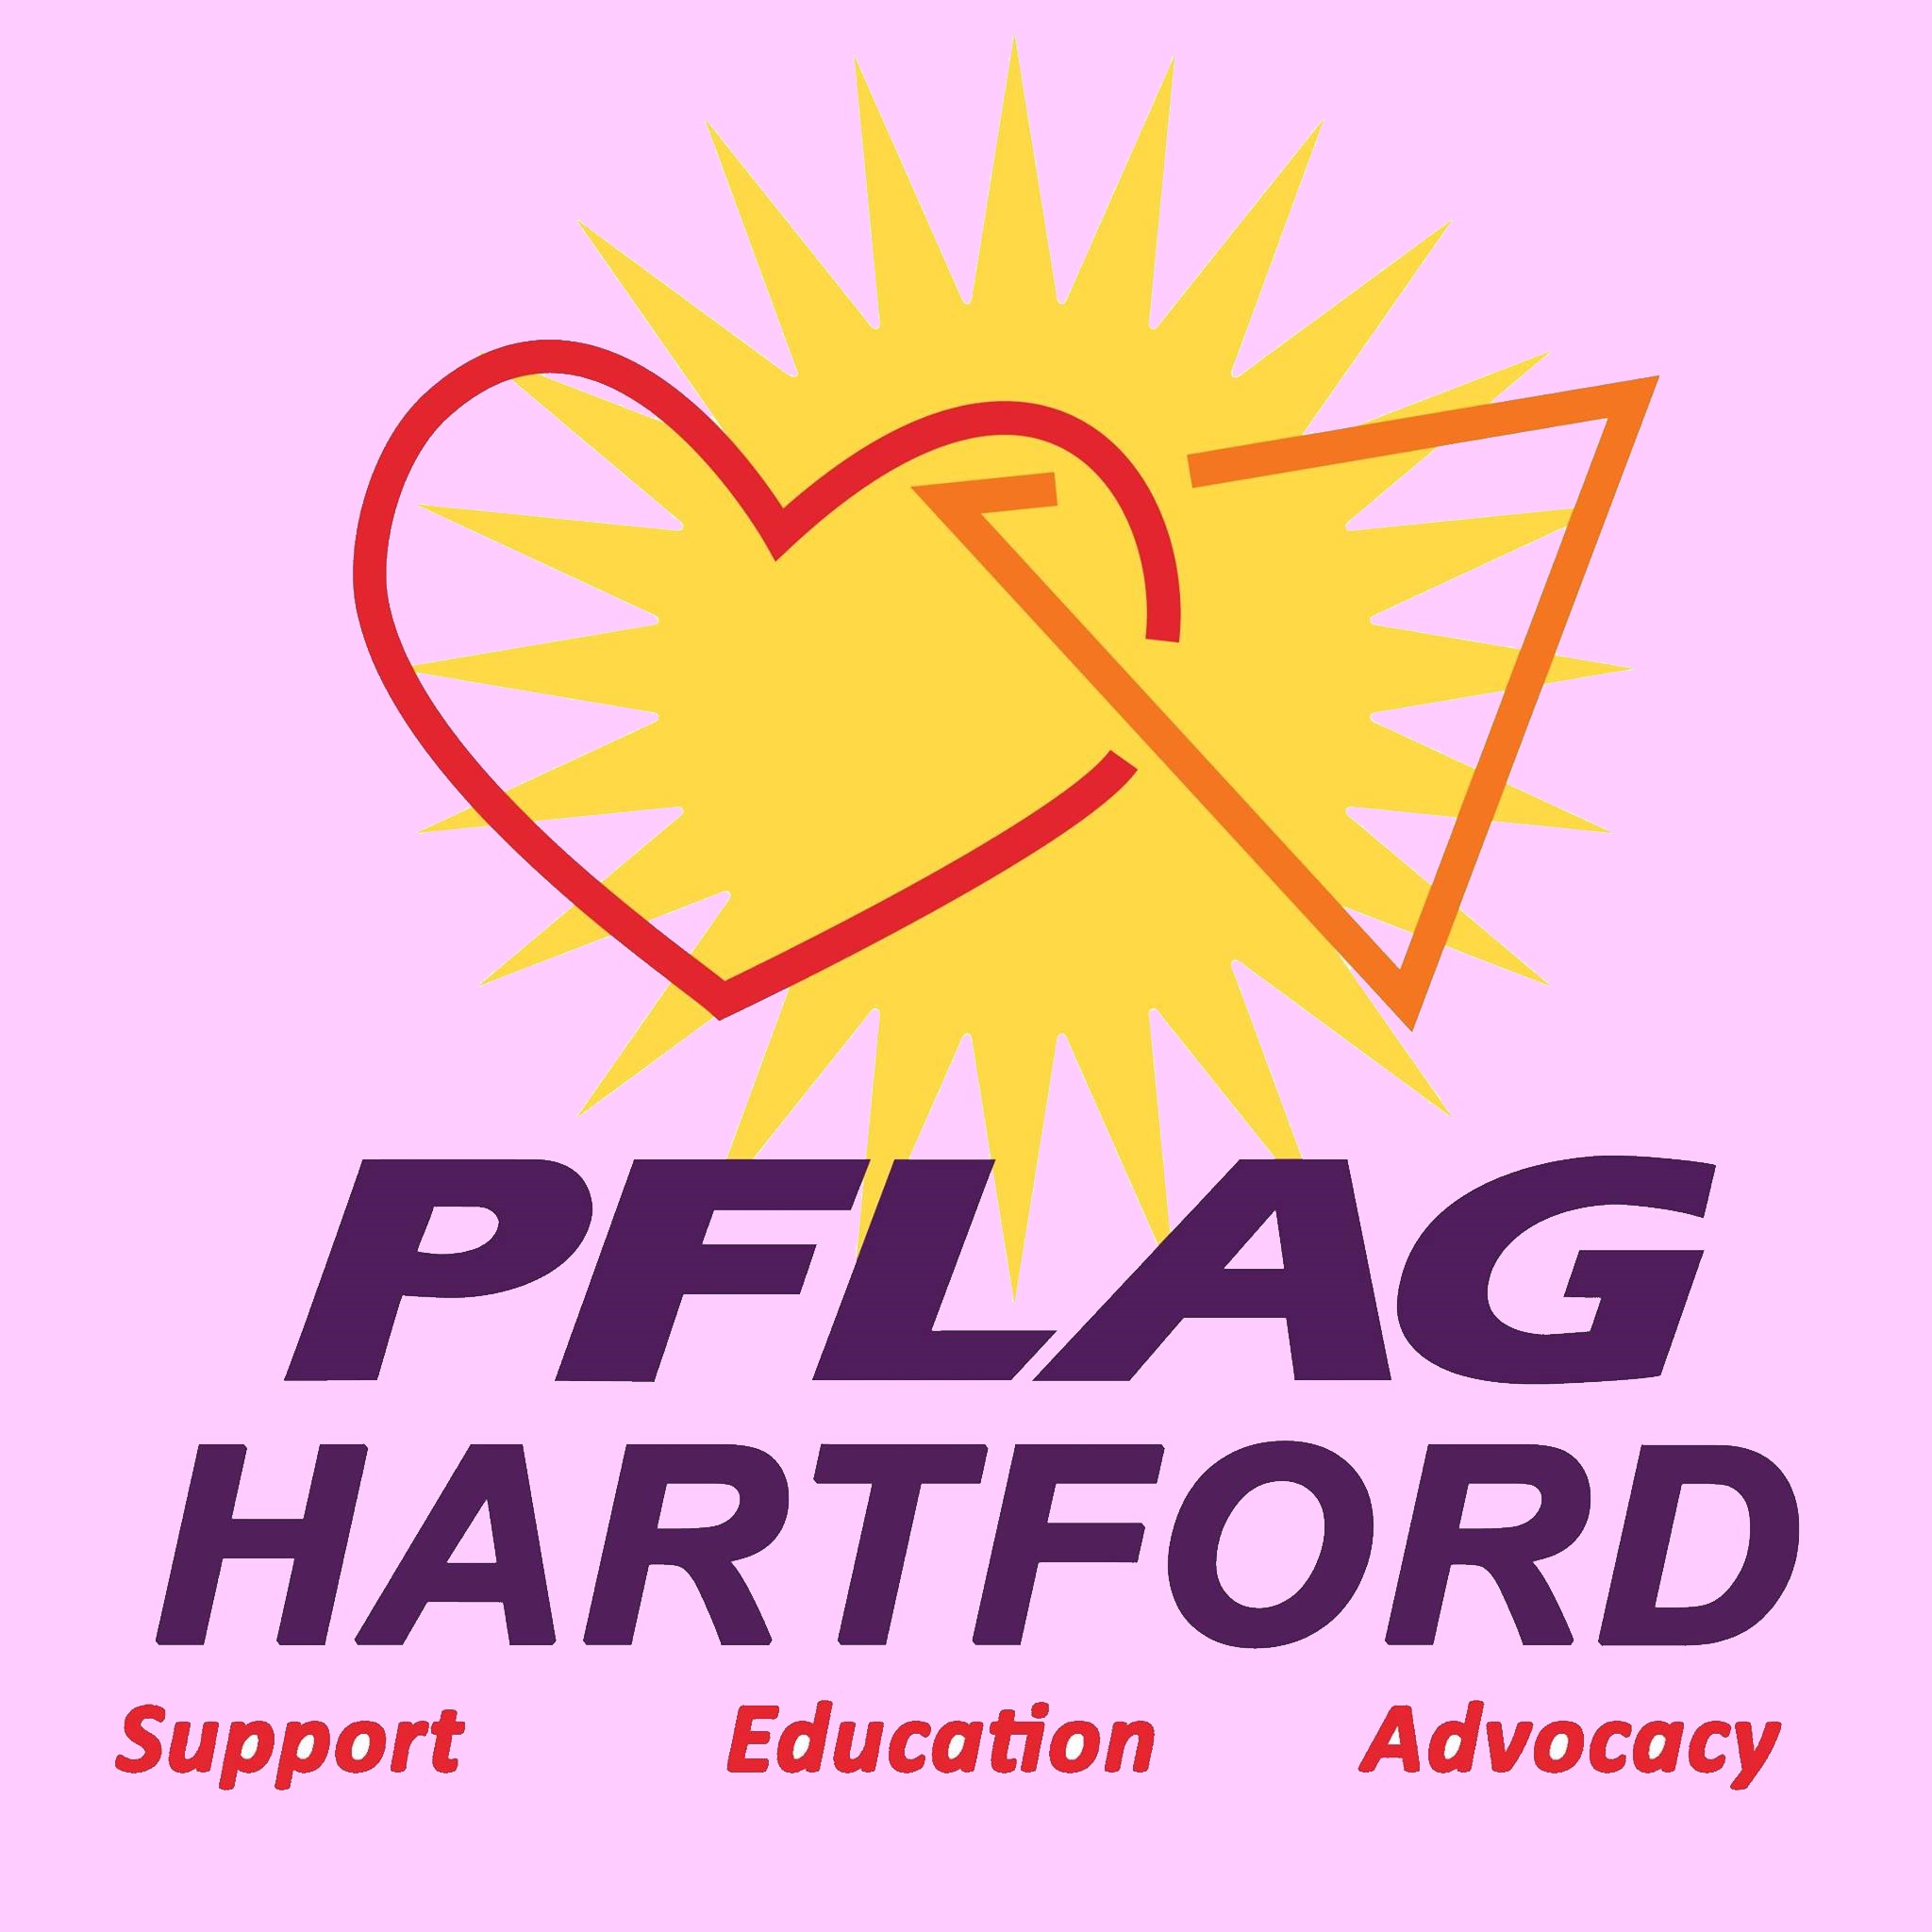 PFLAG Hartford